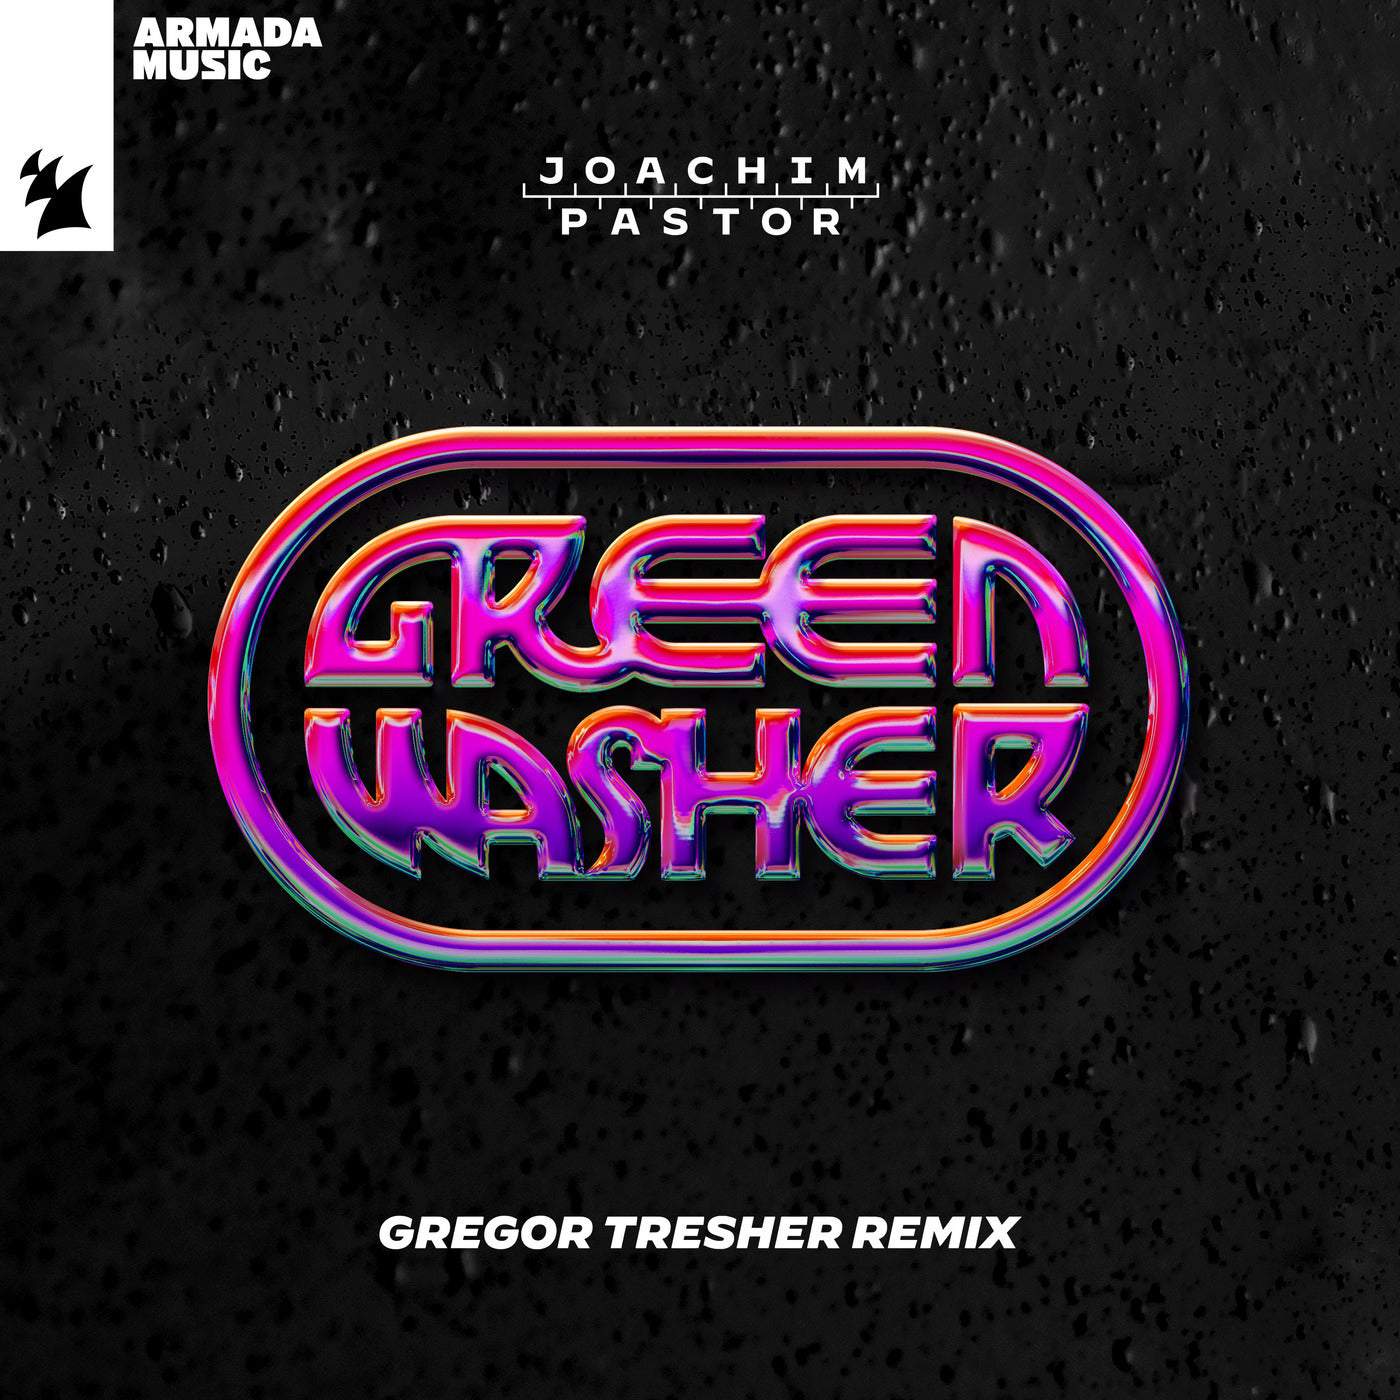 image cover: Joachim Pastor - Green Washer - Gregor Tresher Remix / ARMAS2387R2